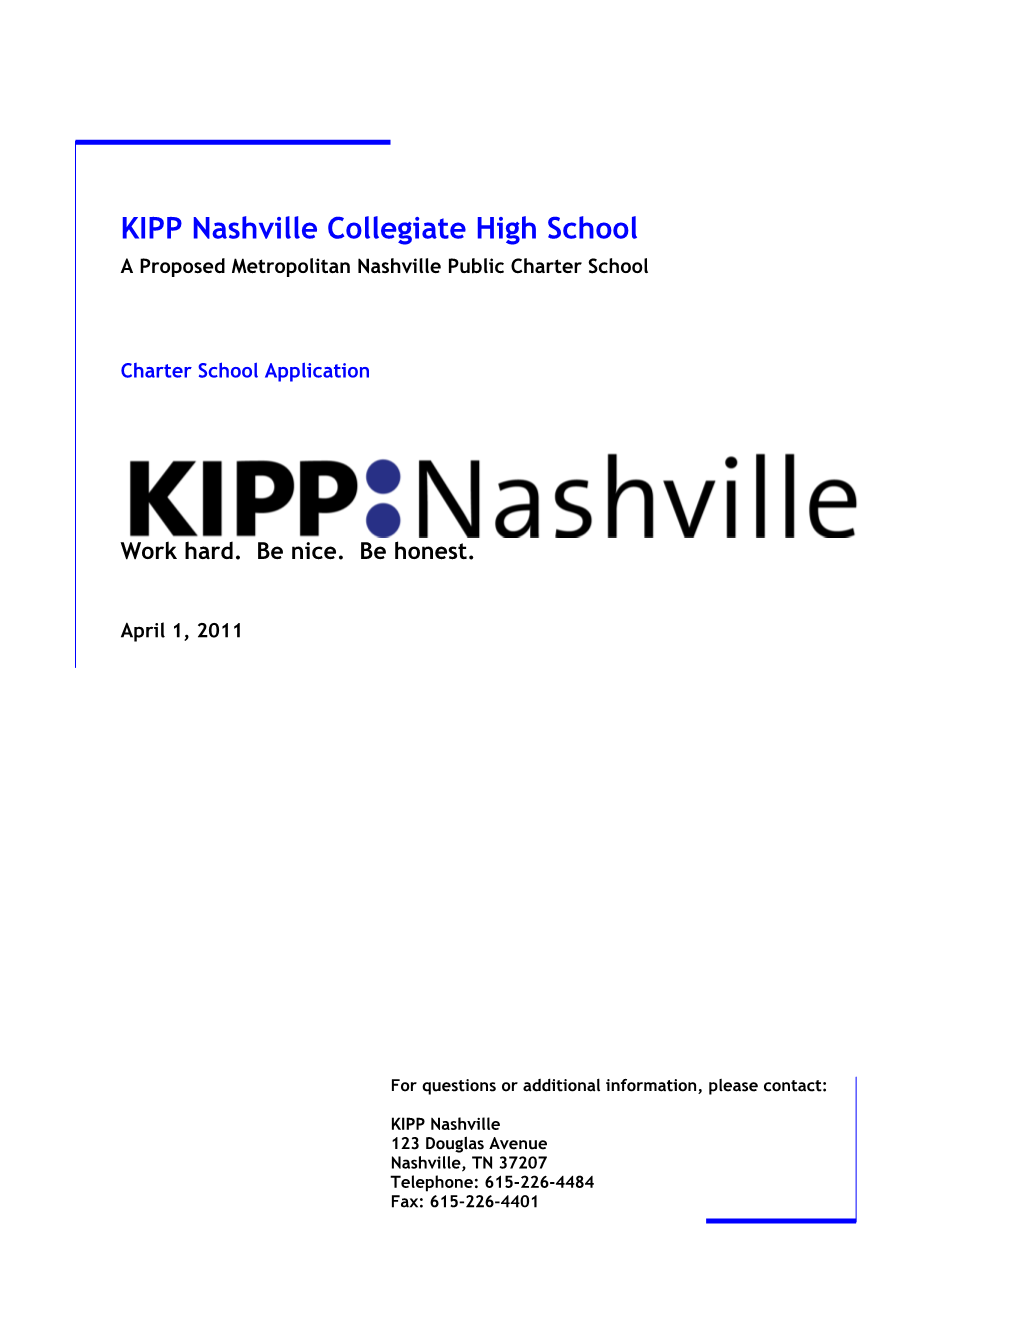 KIPP Nashville Collegiate High School Charter Application